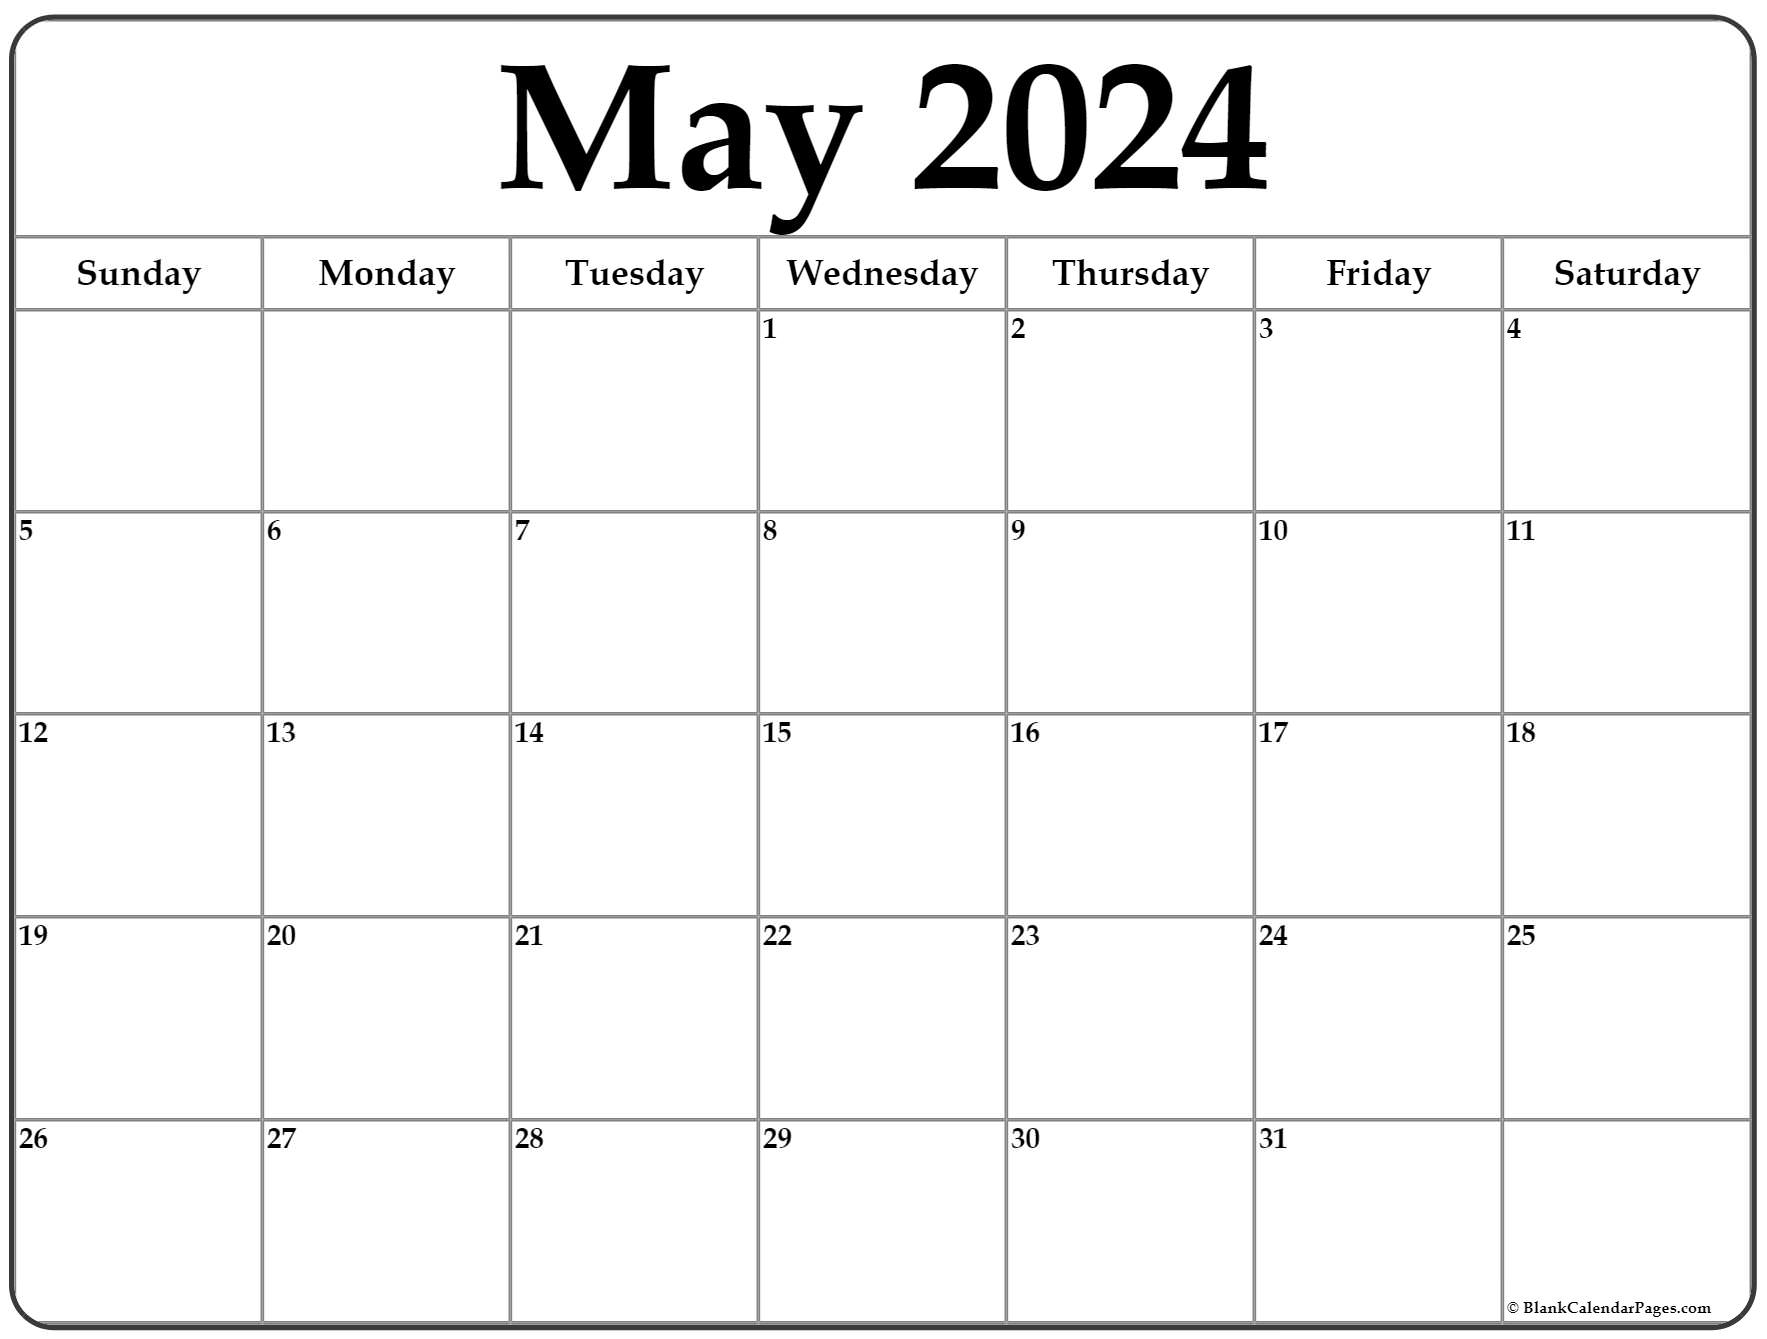 May 2024 Calendar | Free Printable Calendar for Printable Free May 2024 Calendar